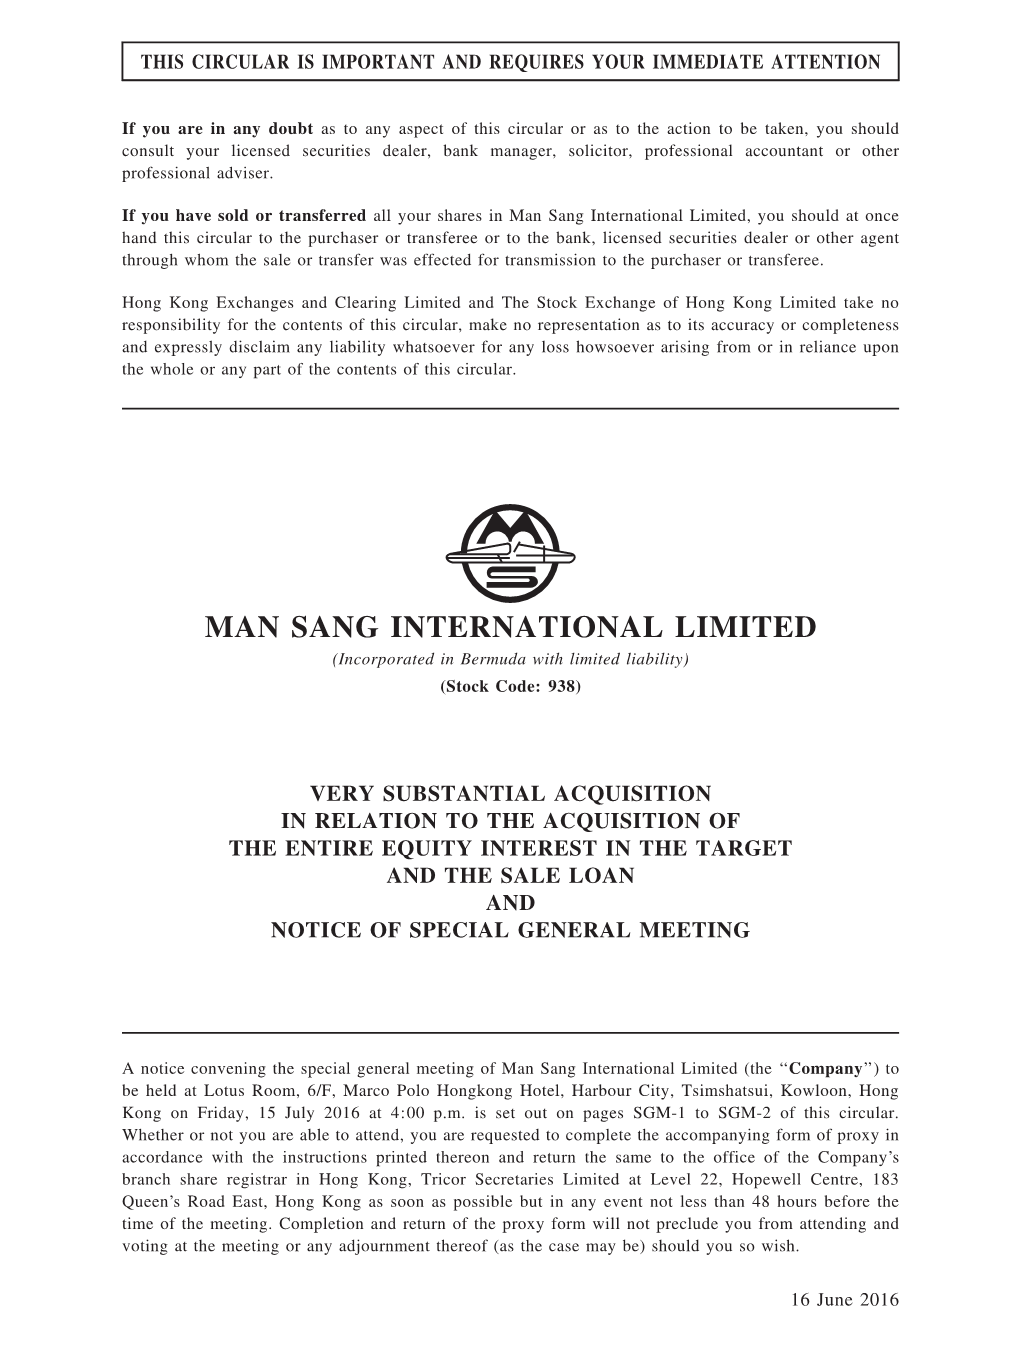 Man Sang International Limited